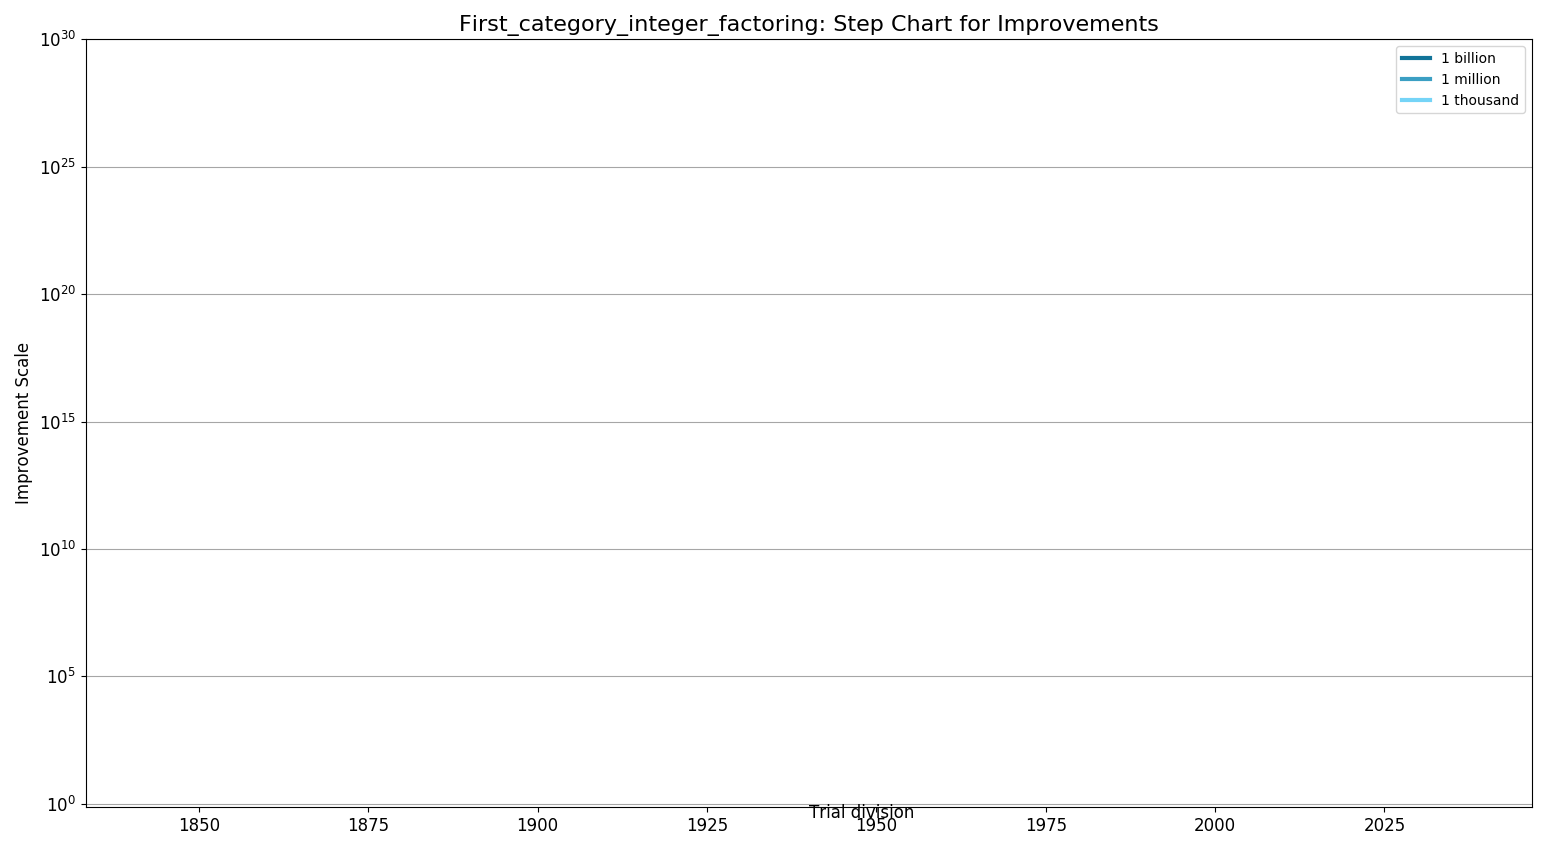 First category integer factoringStepChart.png